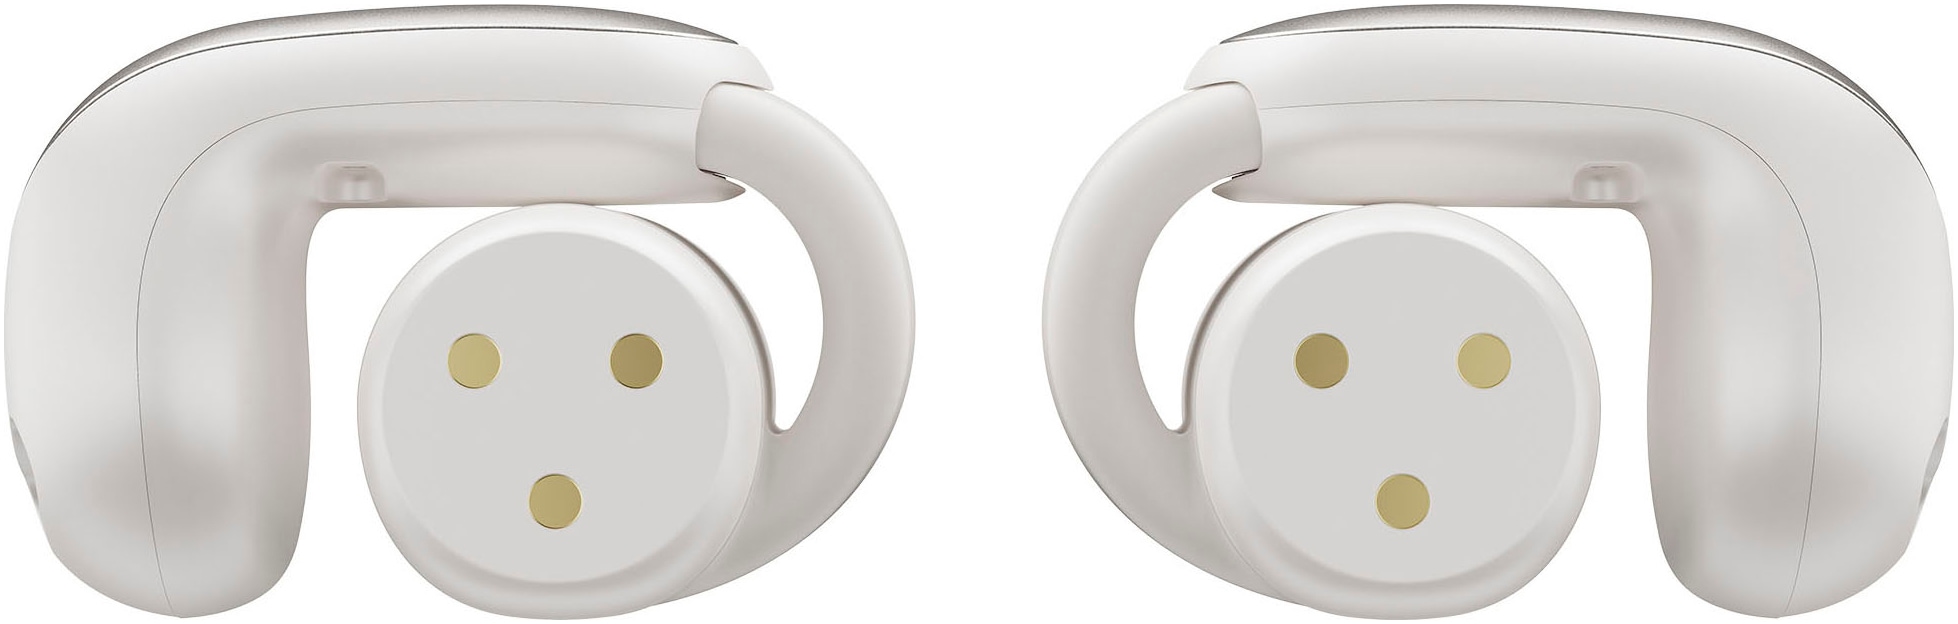 Bose Open-Ear-Kopfhörer »Ultra Open Earbuds mit 2 Modi: Immersive Sound, Stereo«, Bluetooth, Simple Sync, Google Fast Pair, Umgebung wahrnehmen